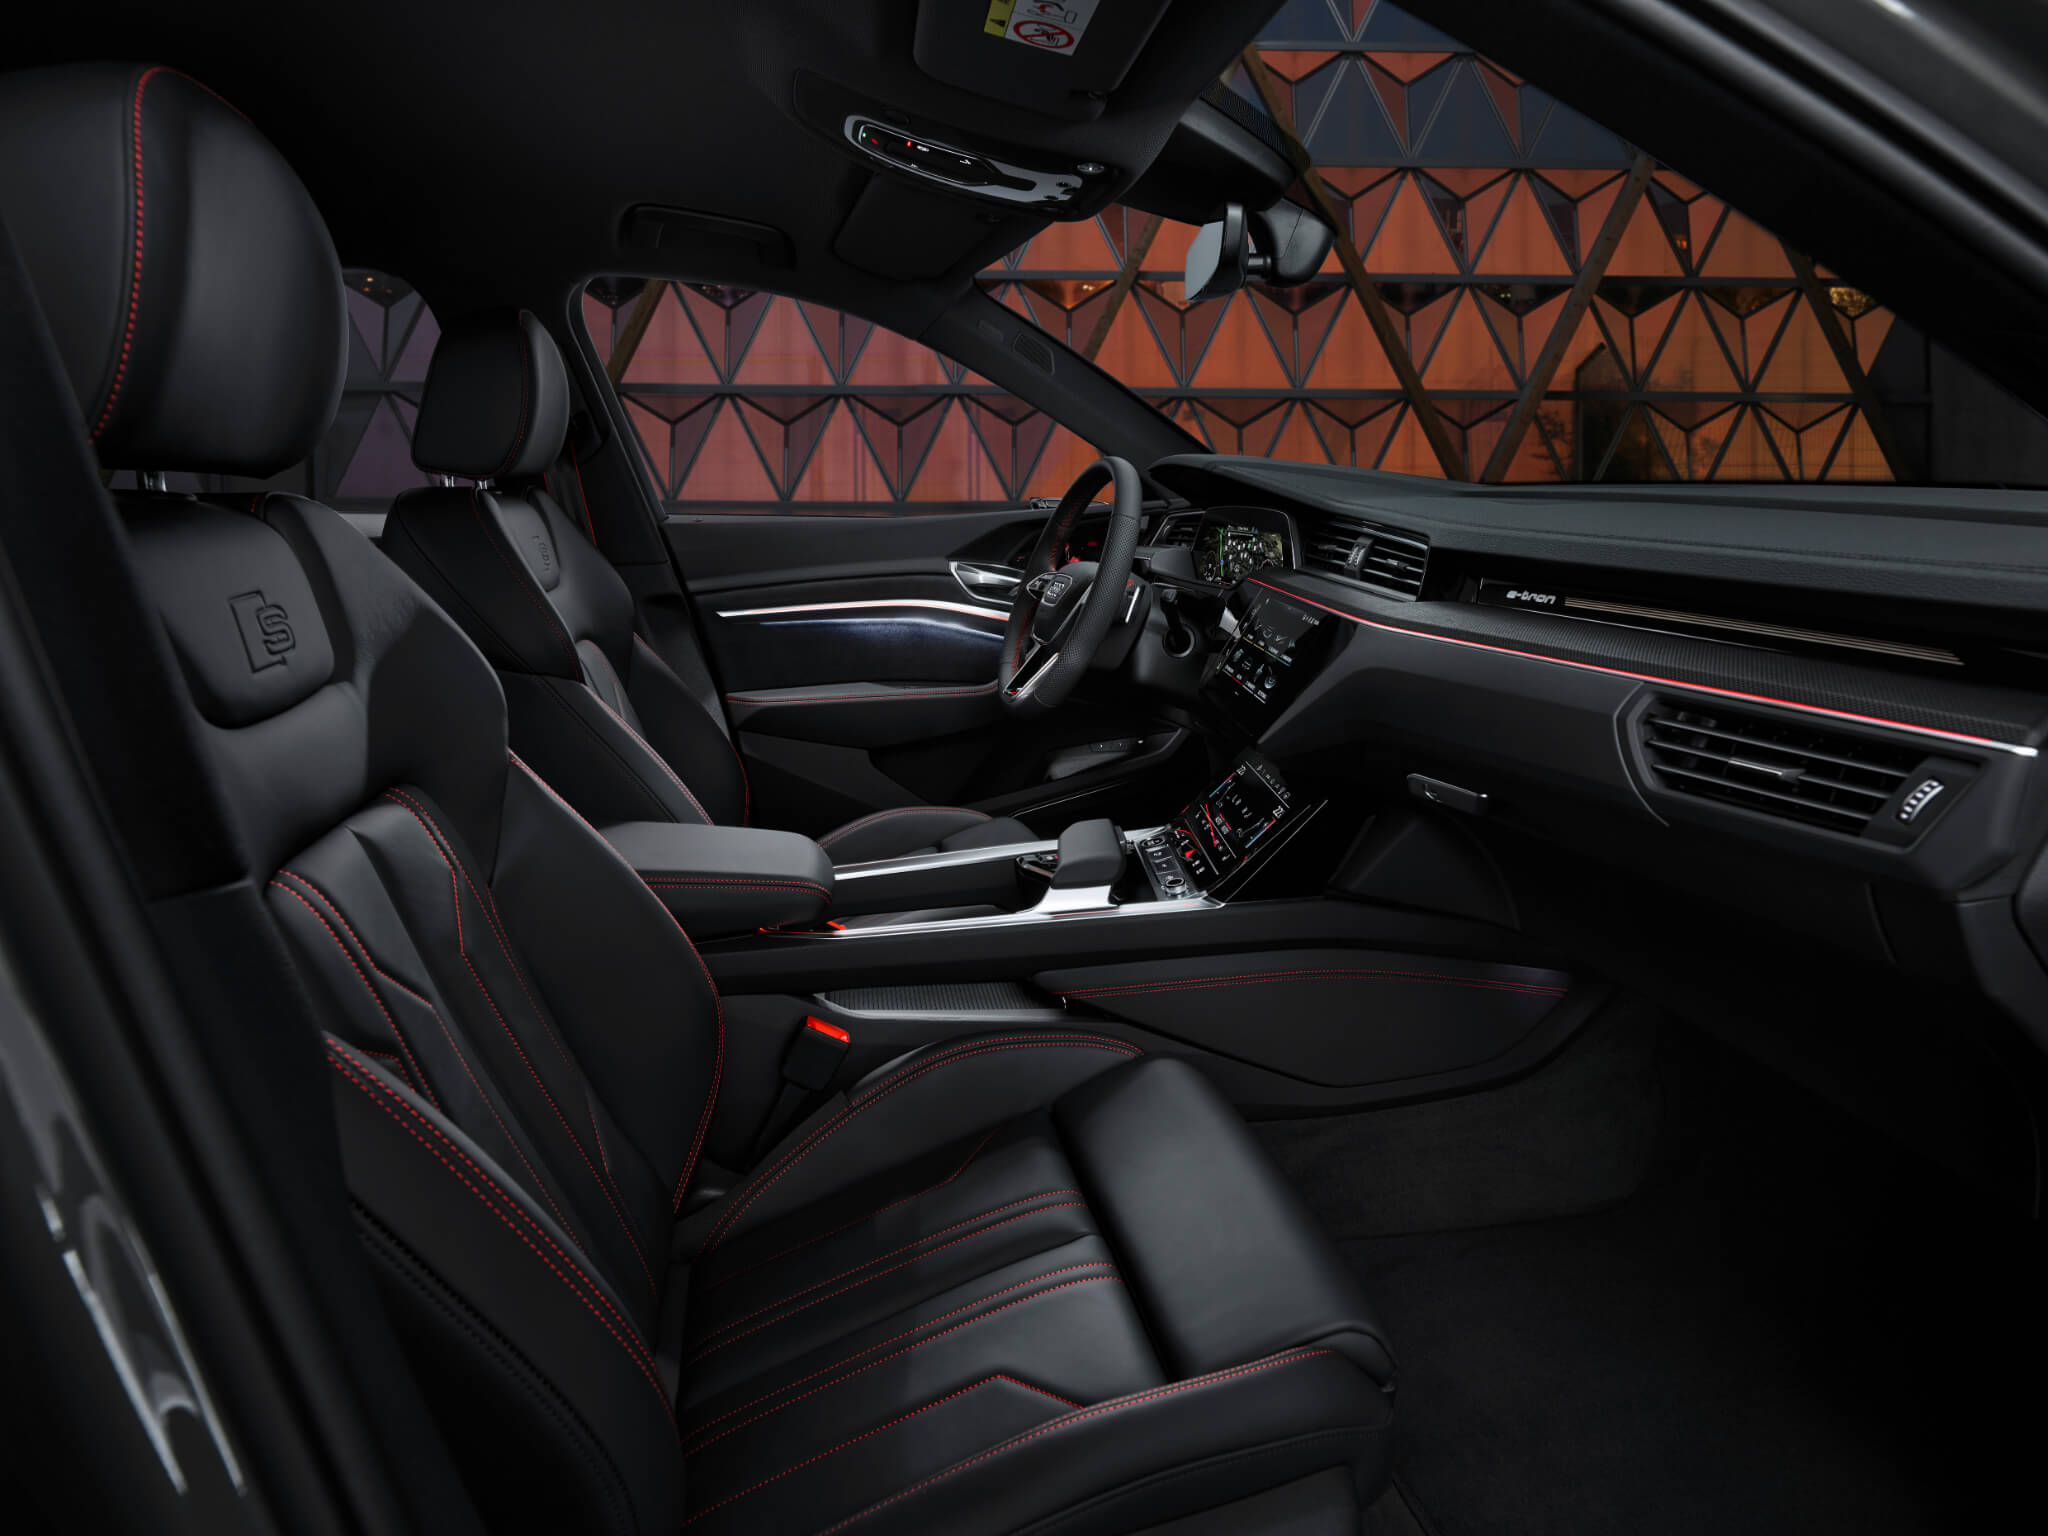 Audi Q8 e-tron 